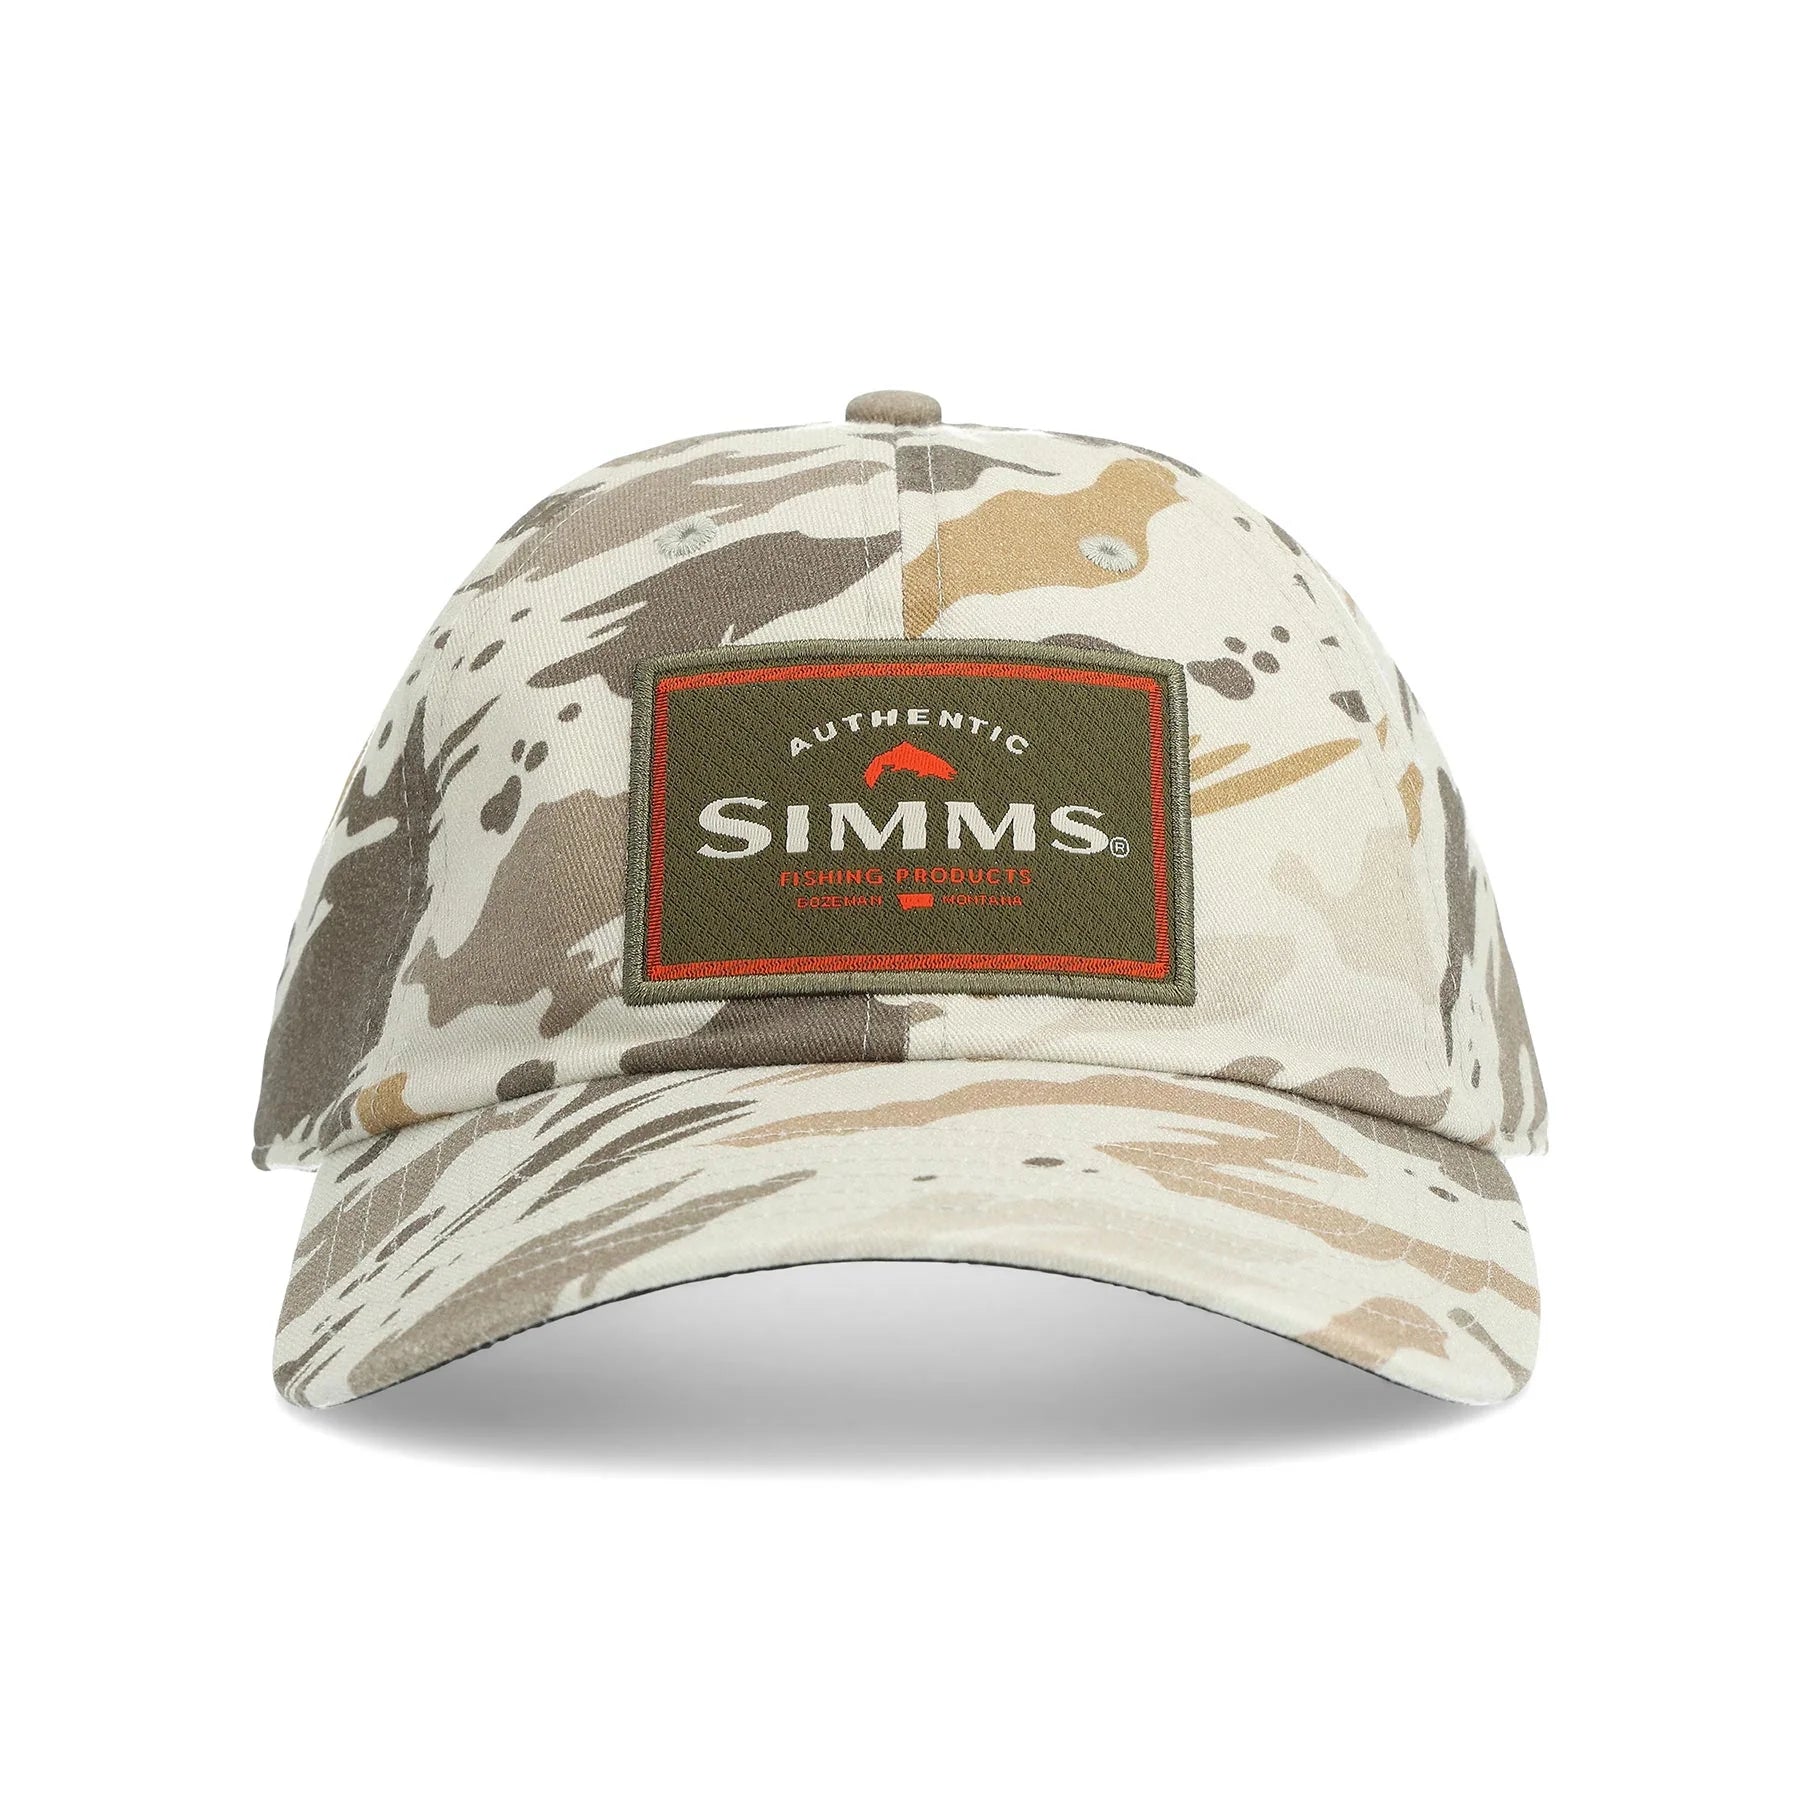 Simms Fishing Single Haul Hat Cap - Riparian Camo Color - NEW!